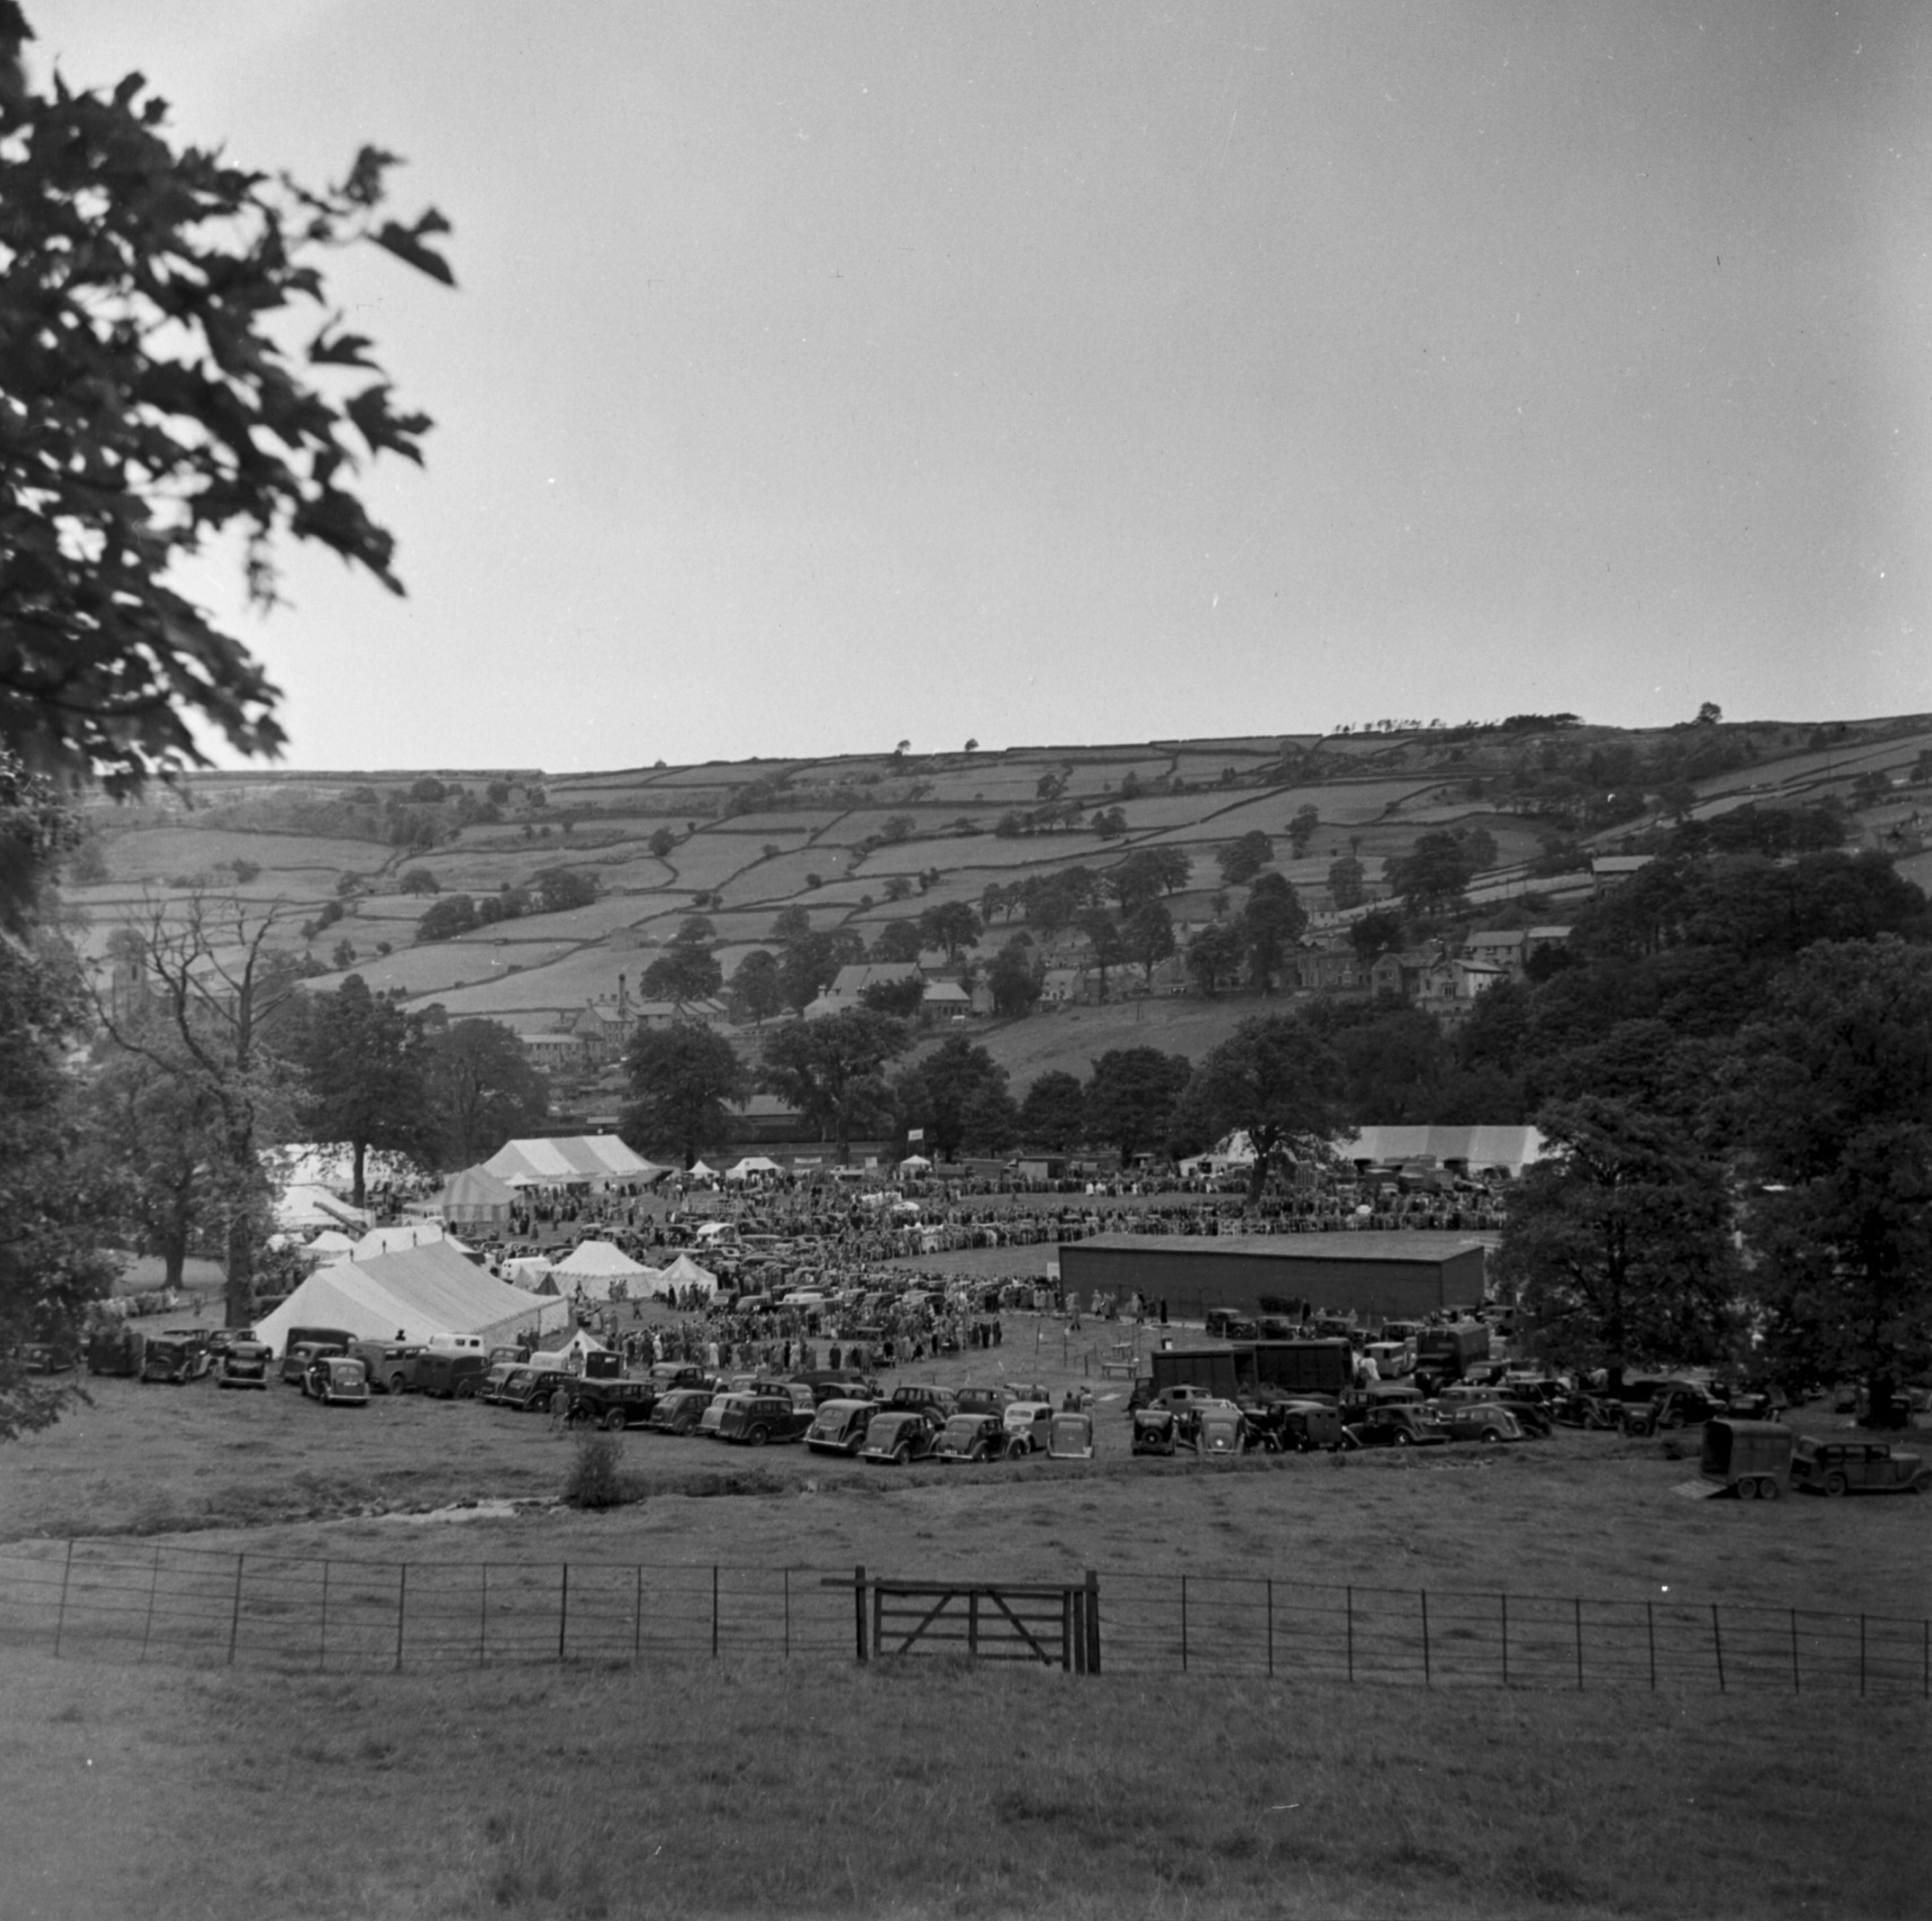 Nidderdale Show, seen here in 1948